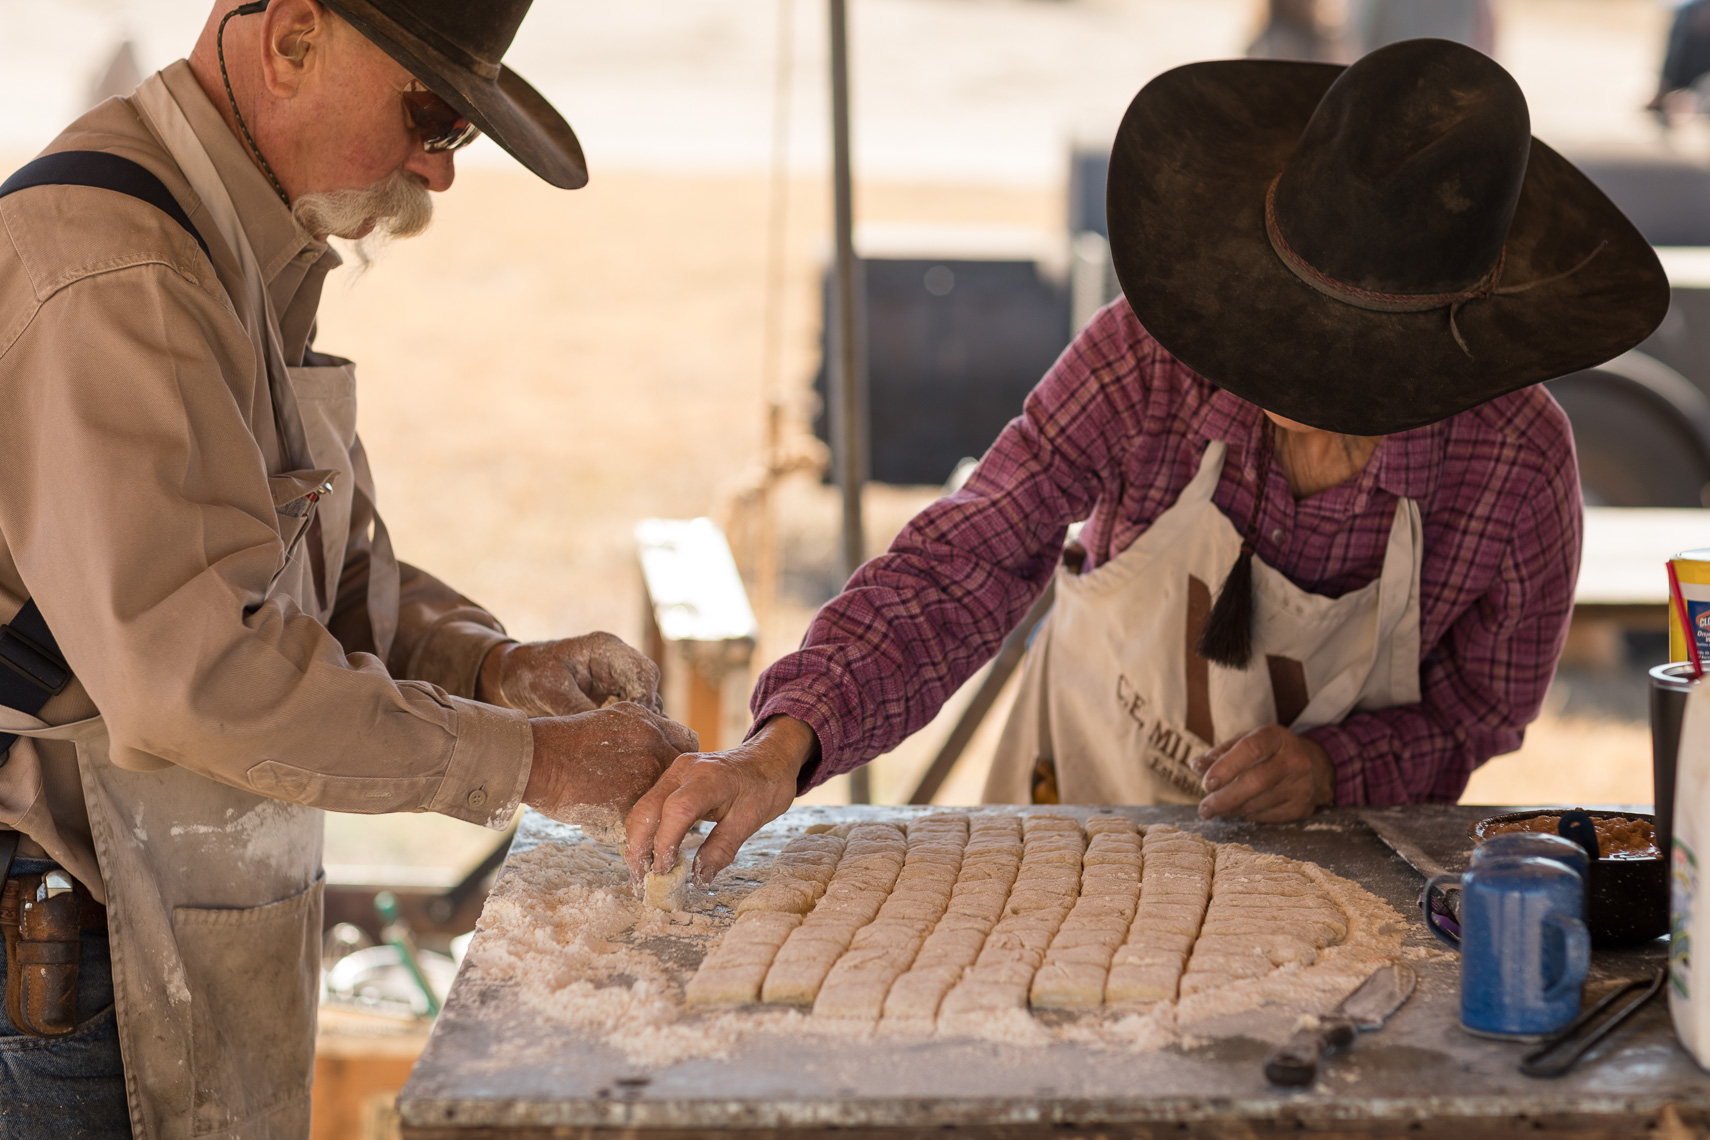 Chuck-Wagon-Food-Cooking-South-Texas-Ranch-Jason-Risner-Photographt-8429-Edit